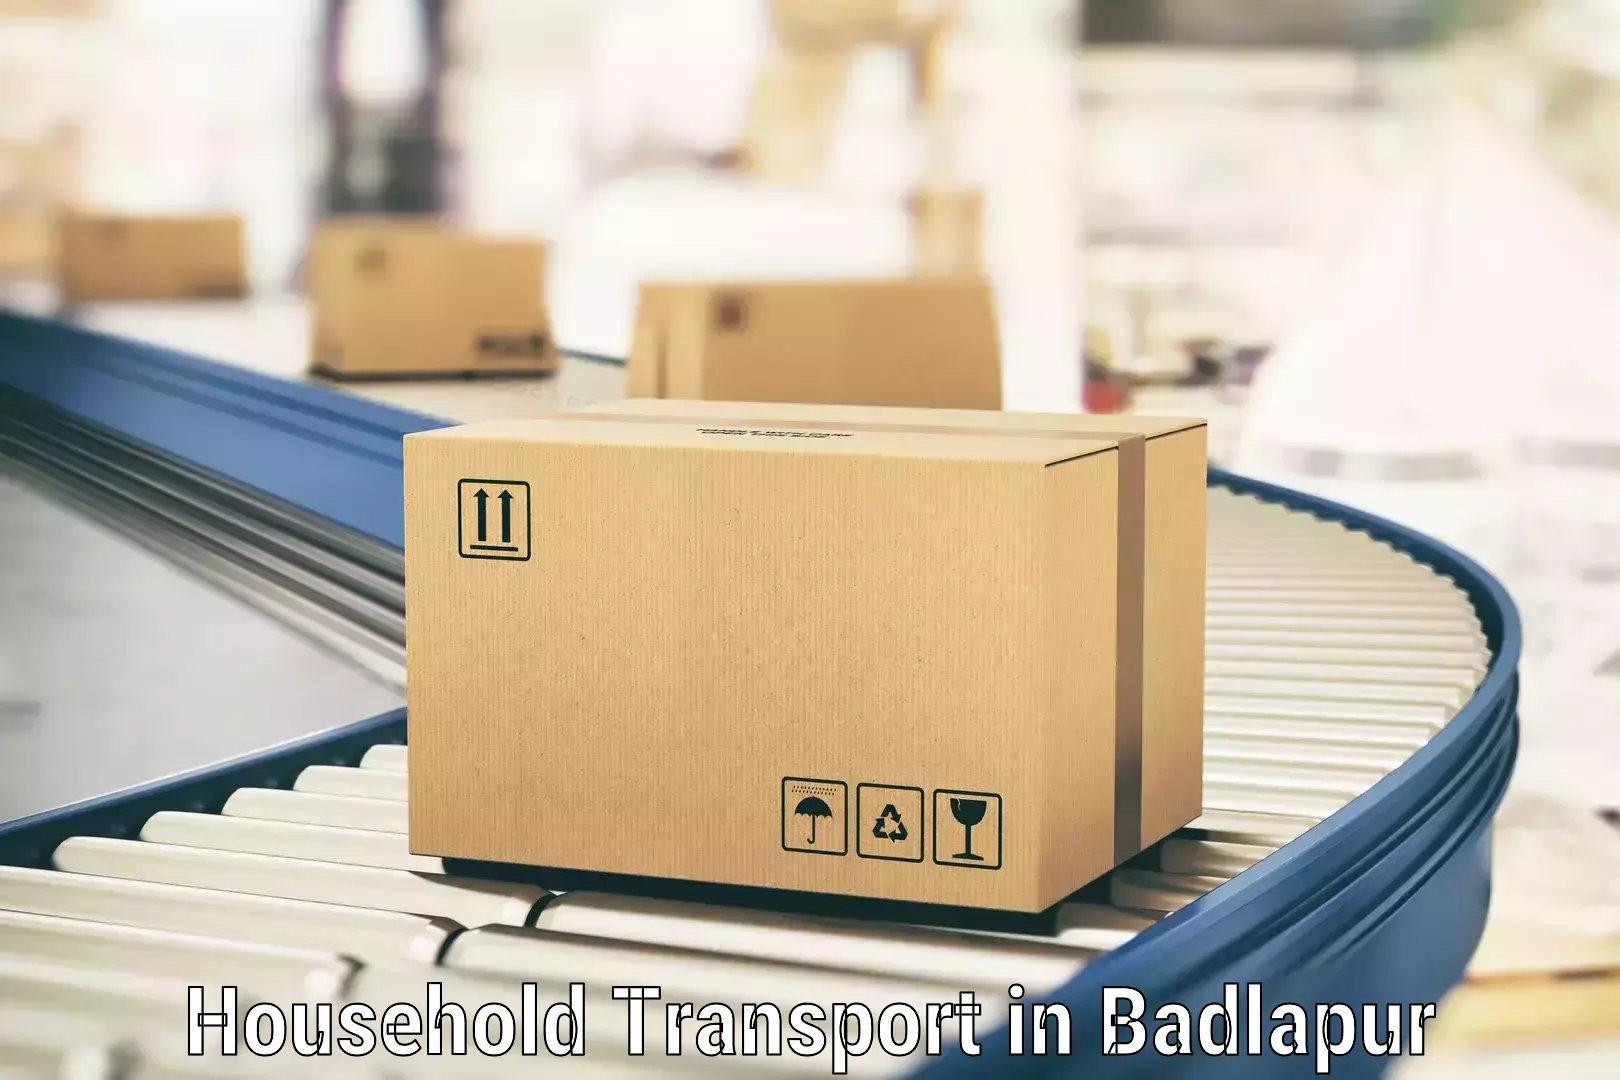 Quality household transport in Badlapur